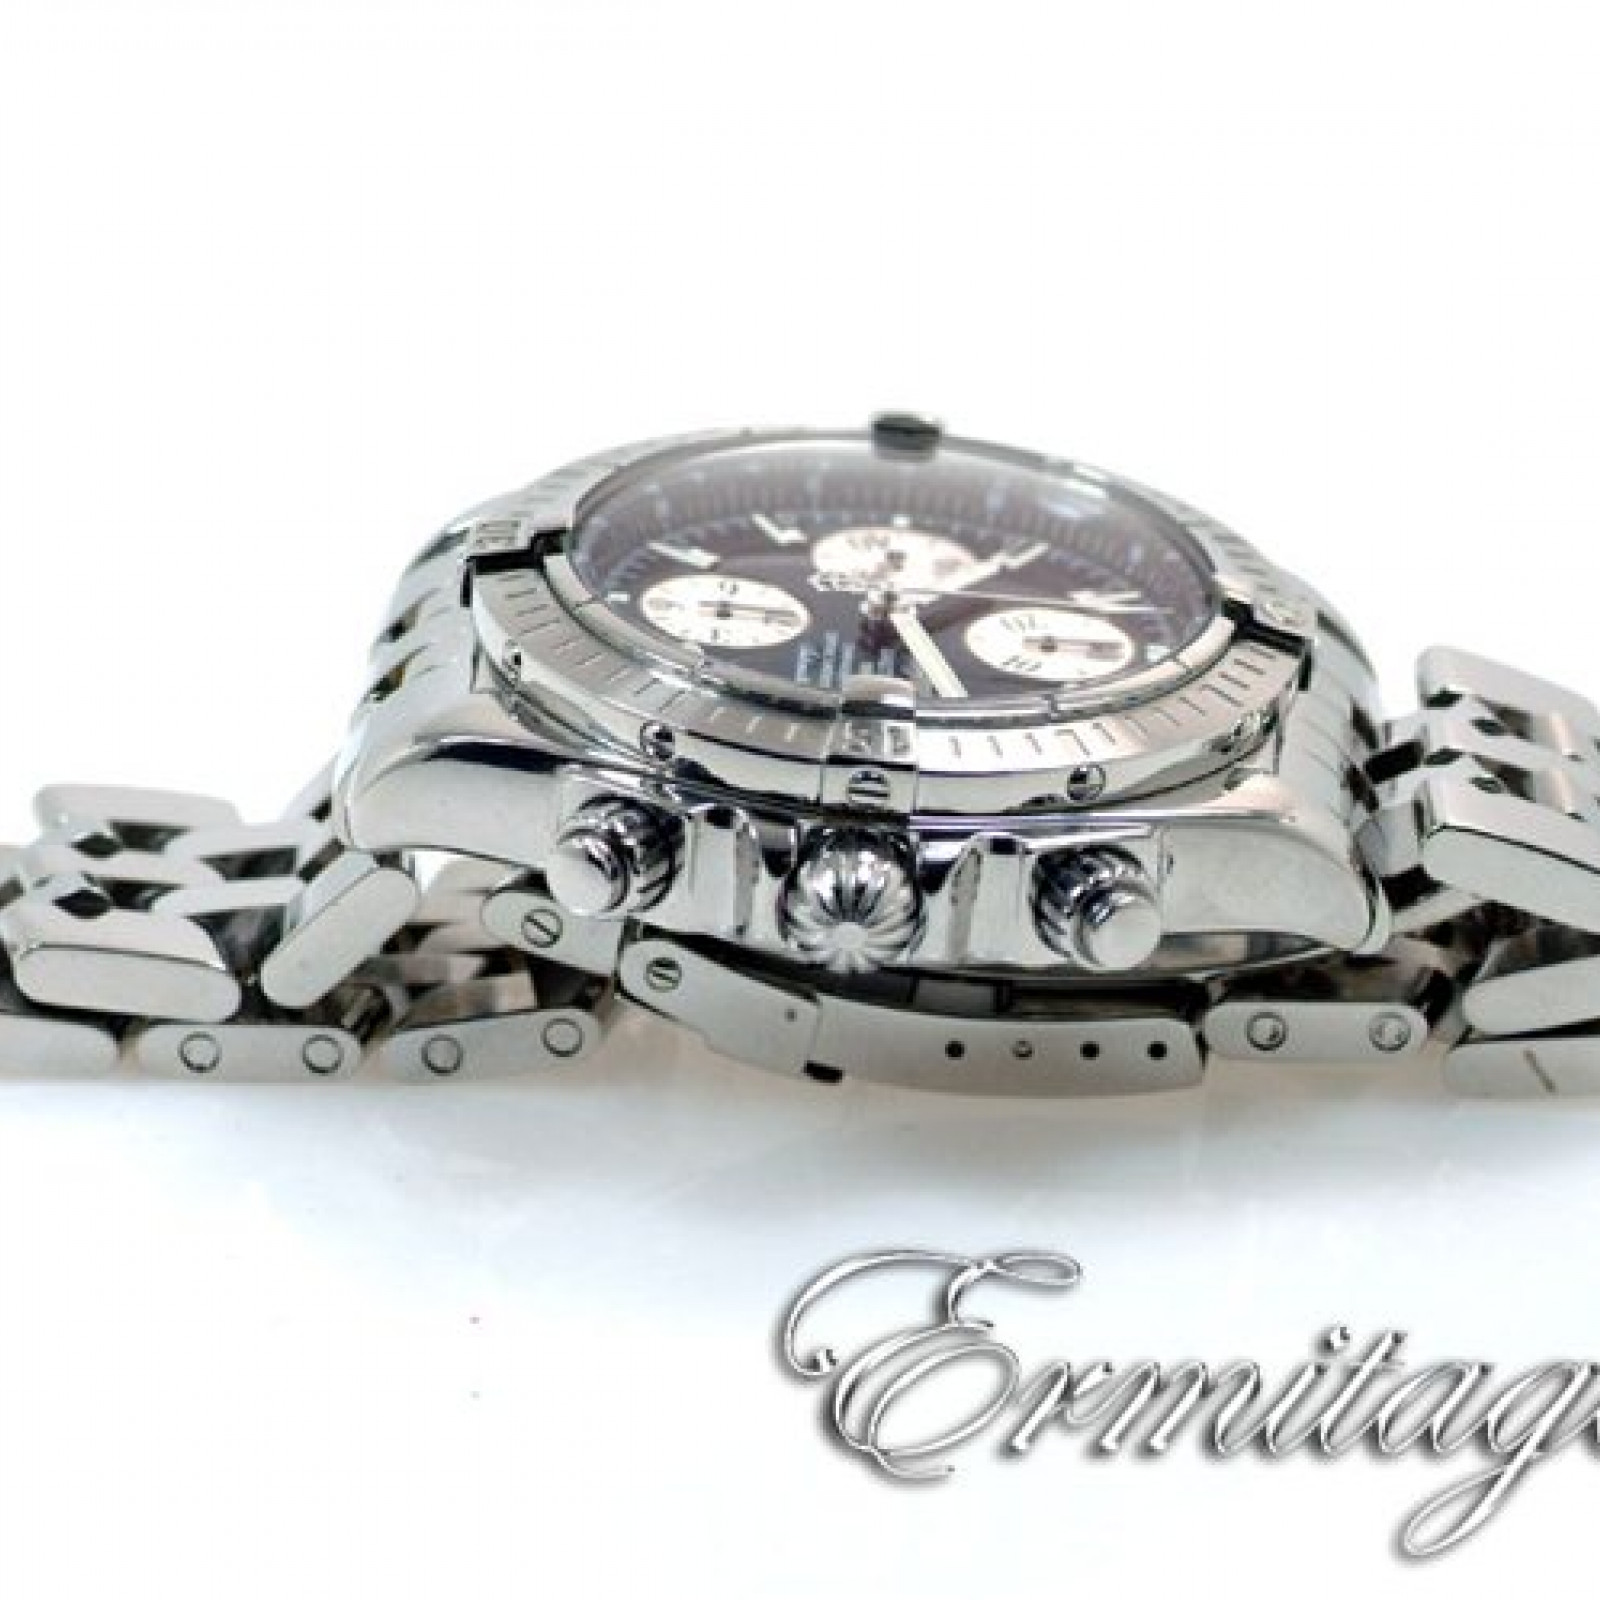 Authentic Breitling Chronomat Evolution A13356 Steel